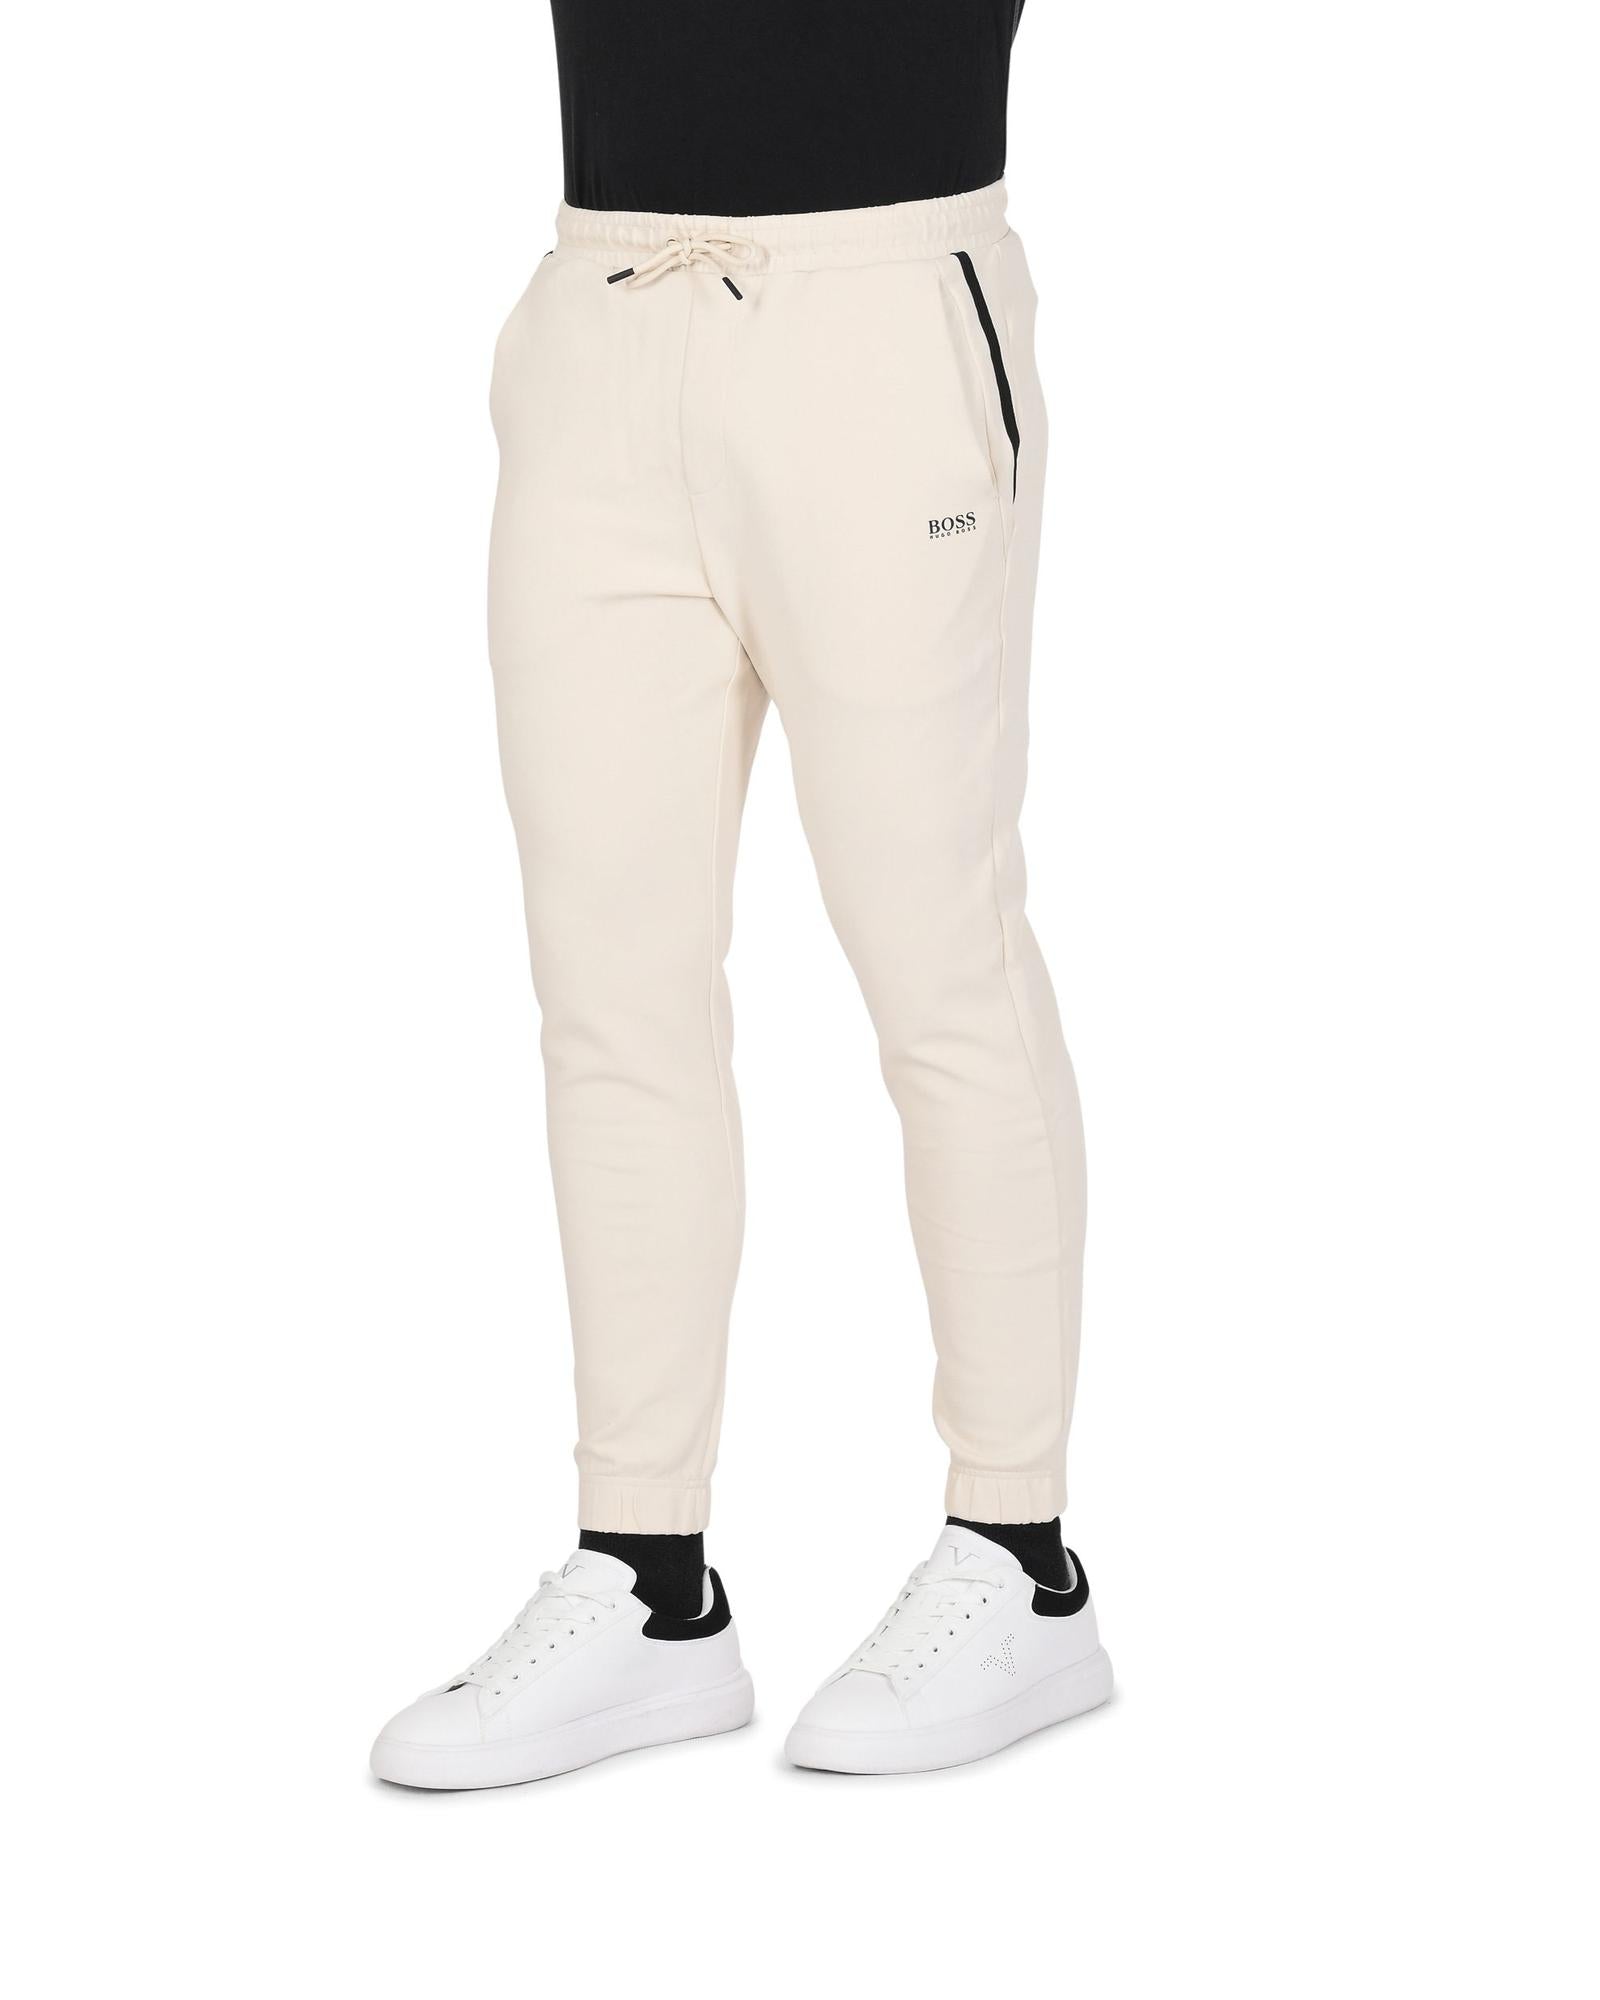 Men's Cotton Blend White Pants for Men in White - XL